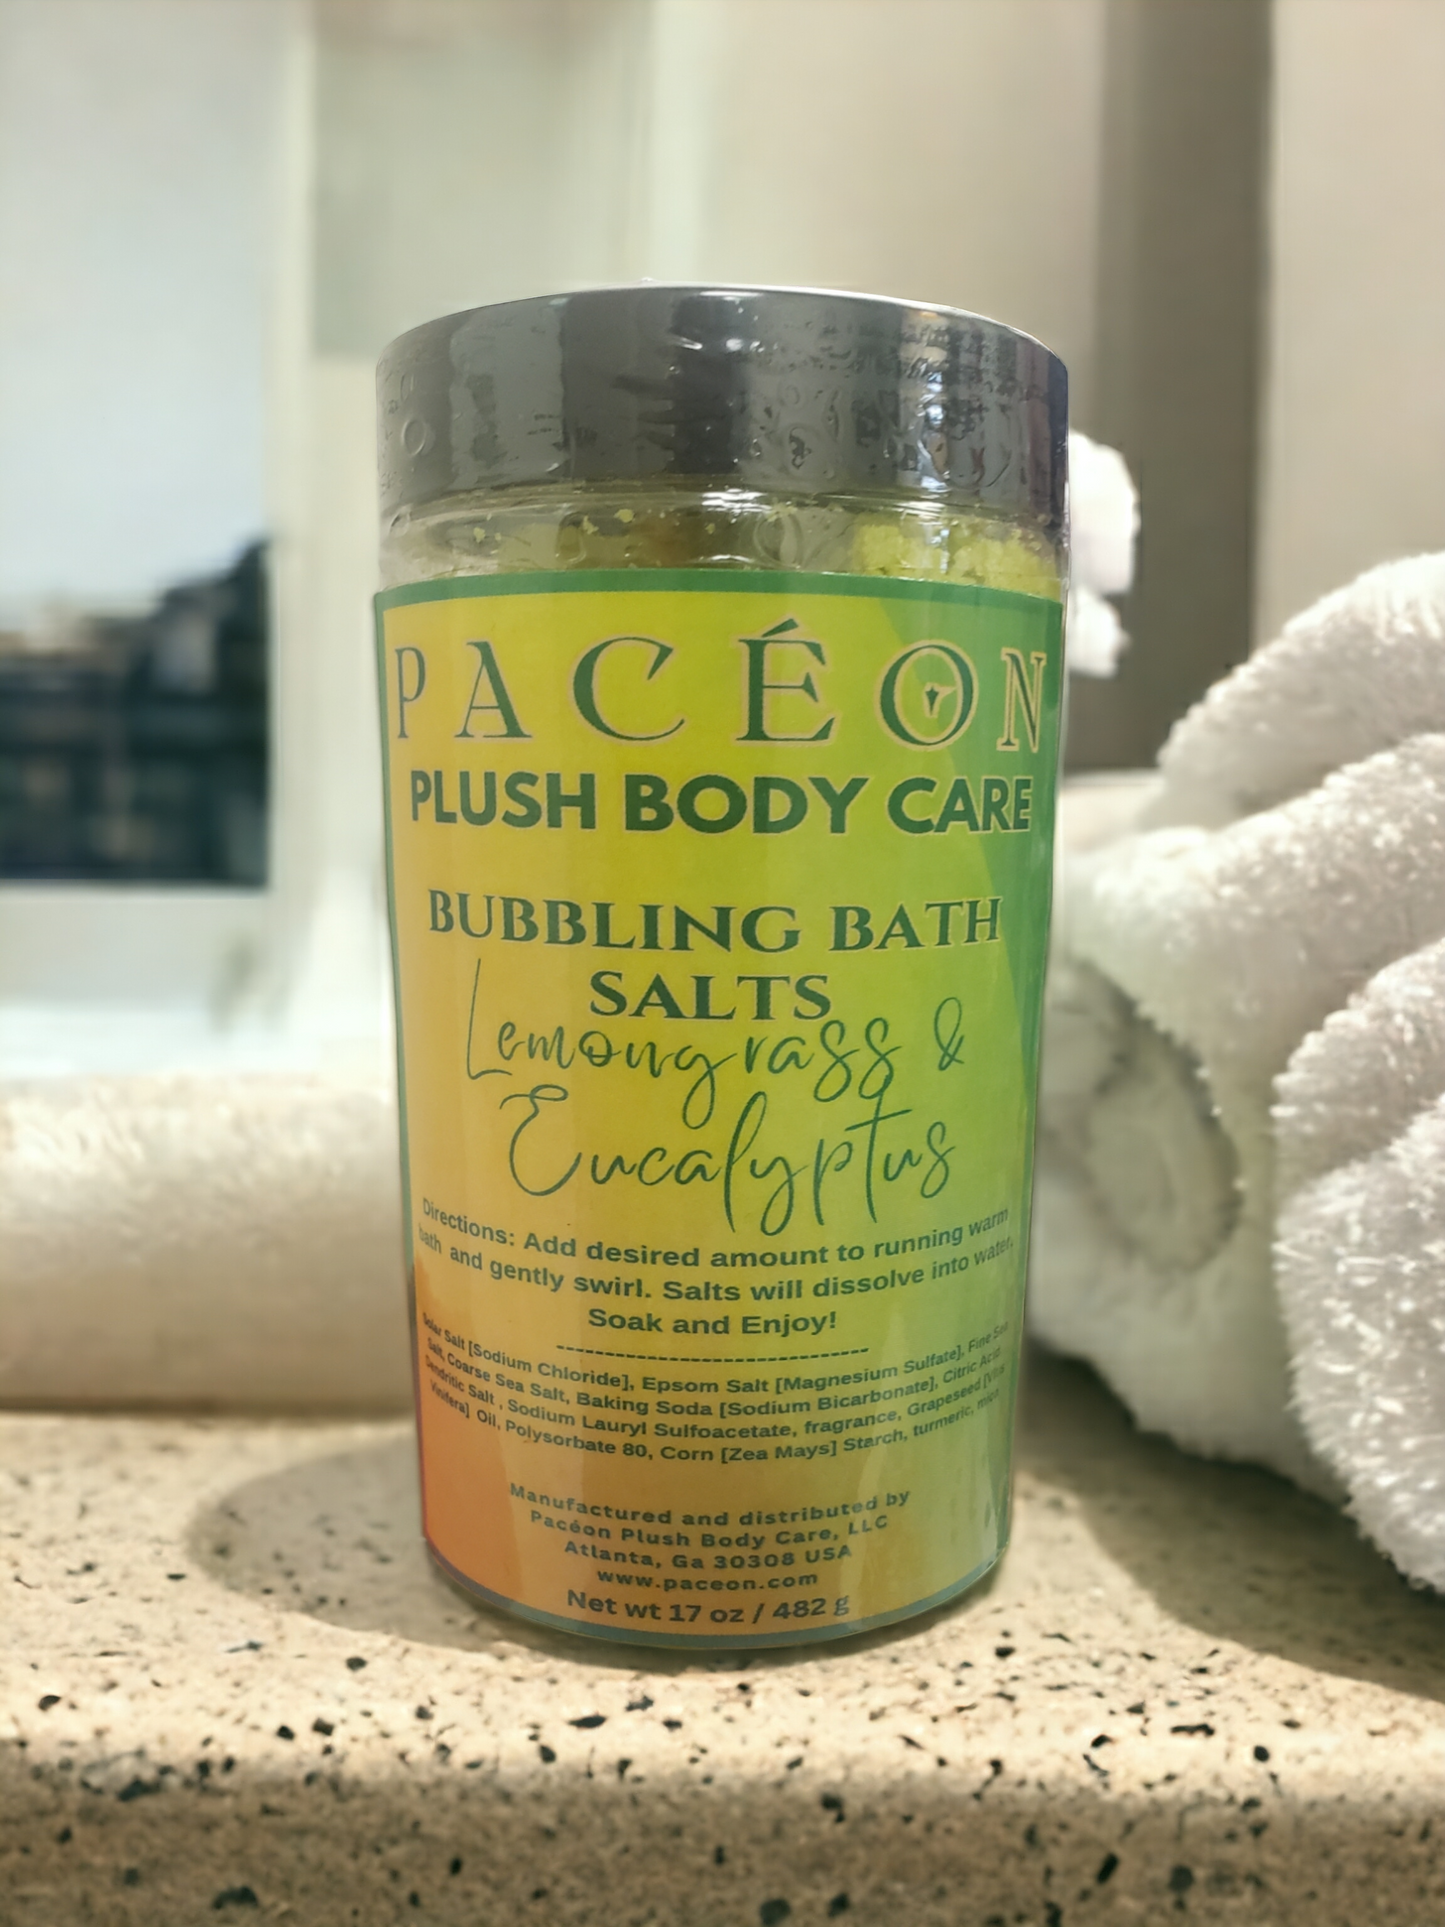 Bubbling Bath Salts